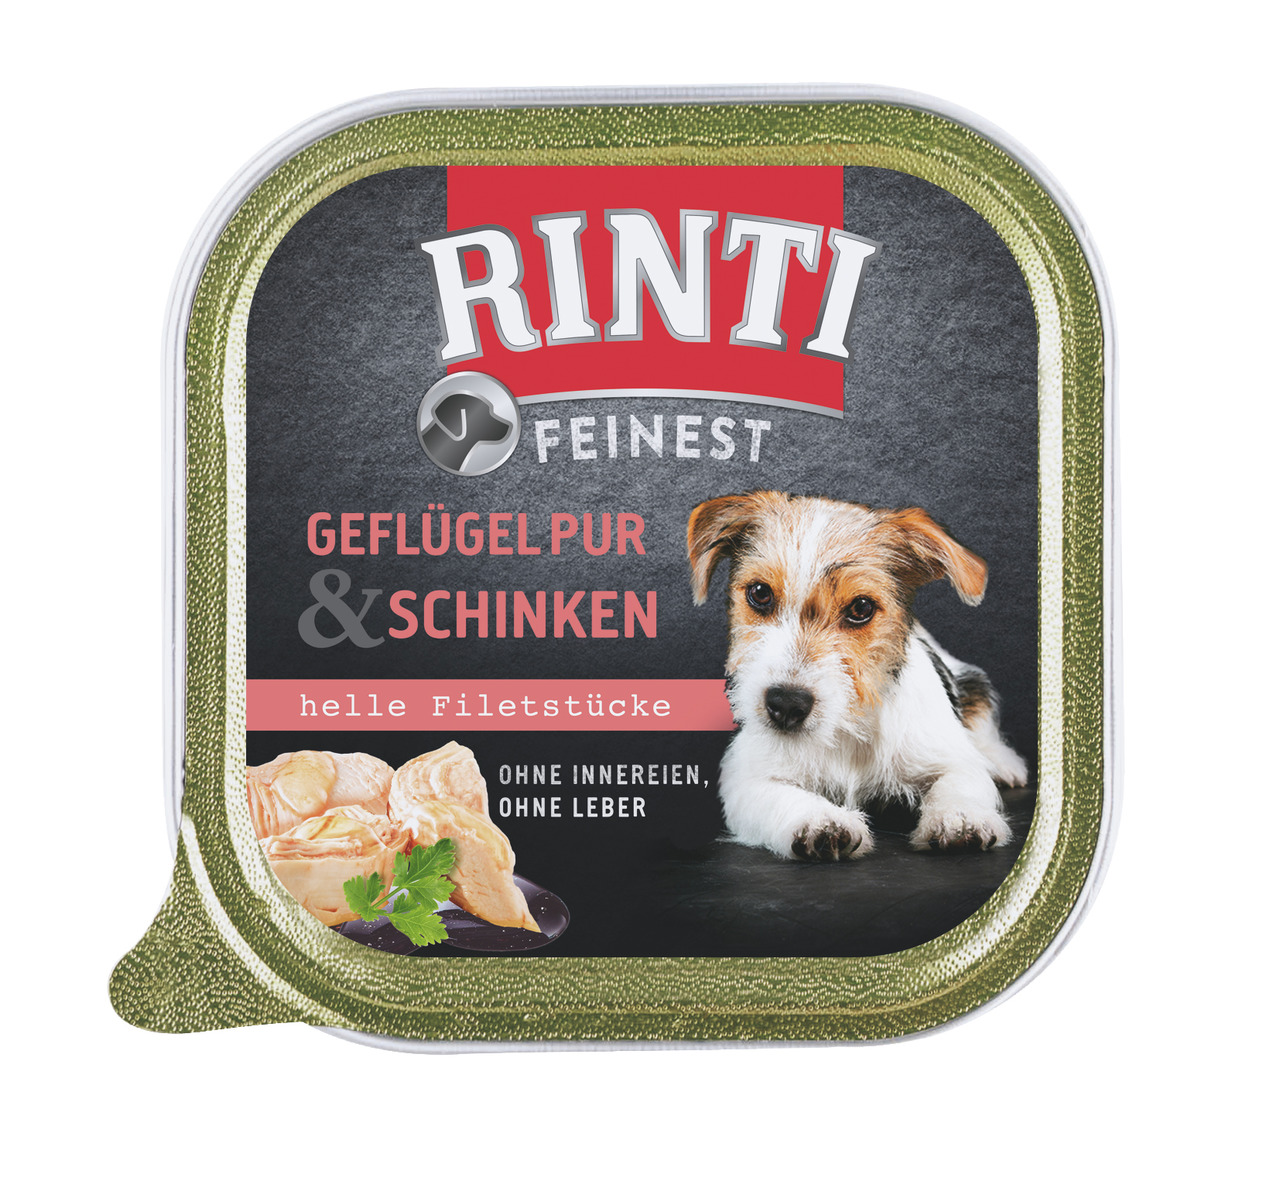 RINTI Feinest Geflügel Pur & Schinken 150g Schale Hundenassfutter